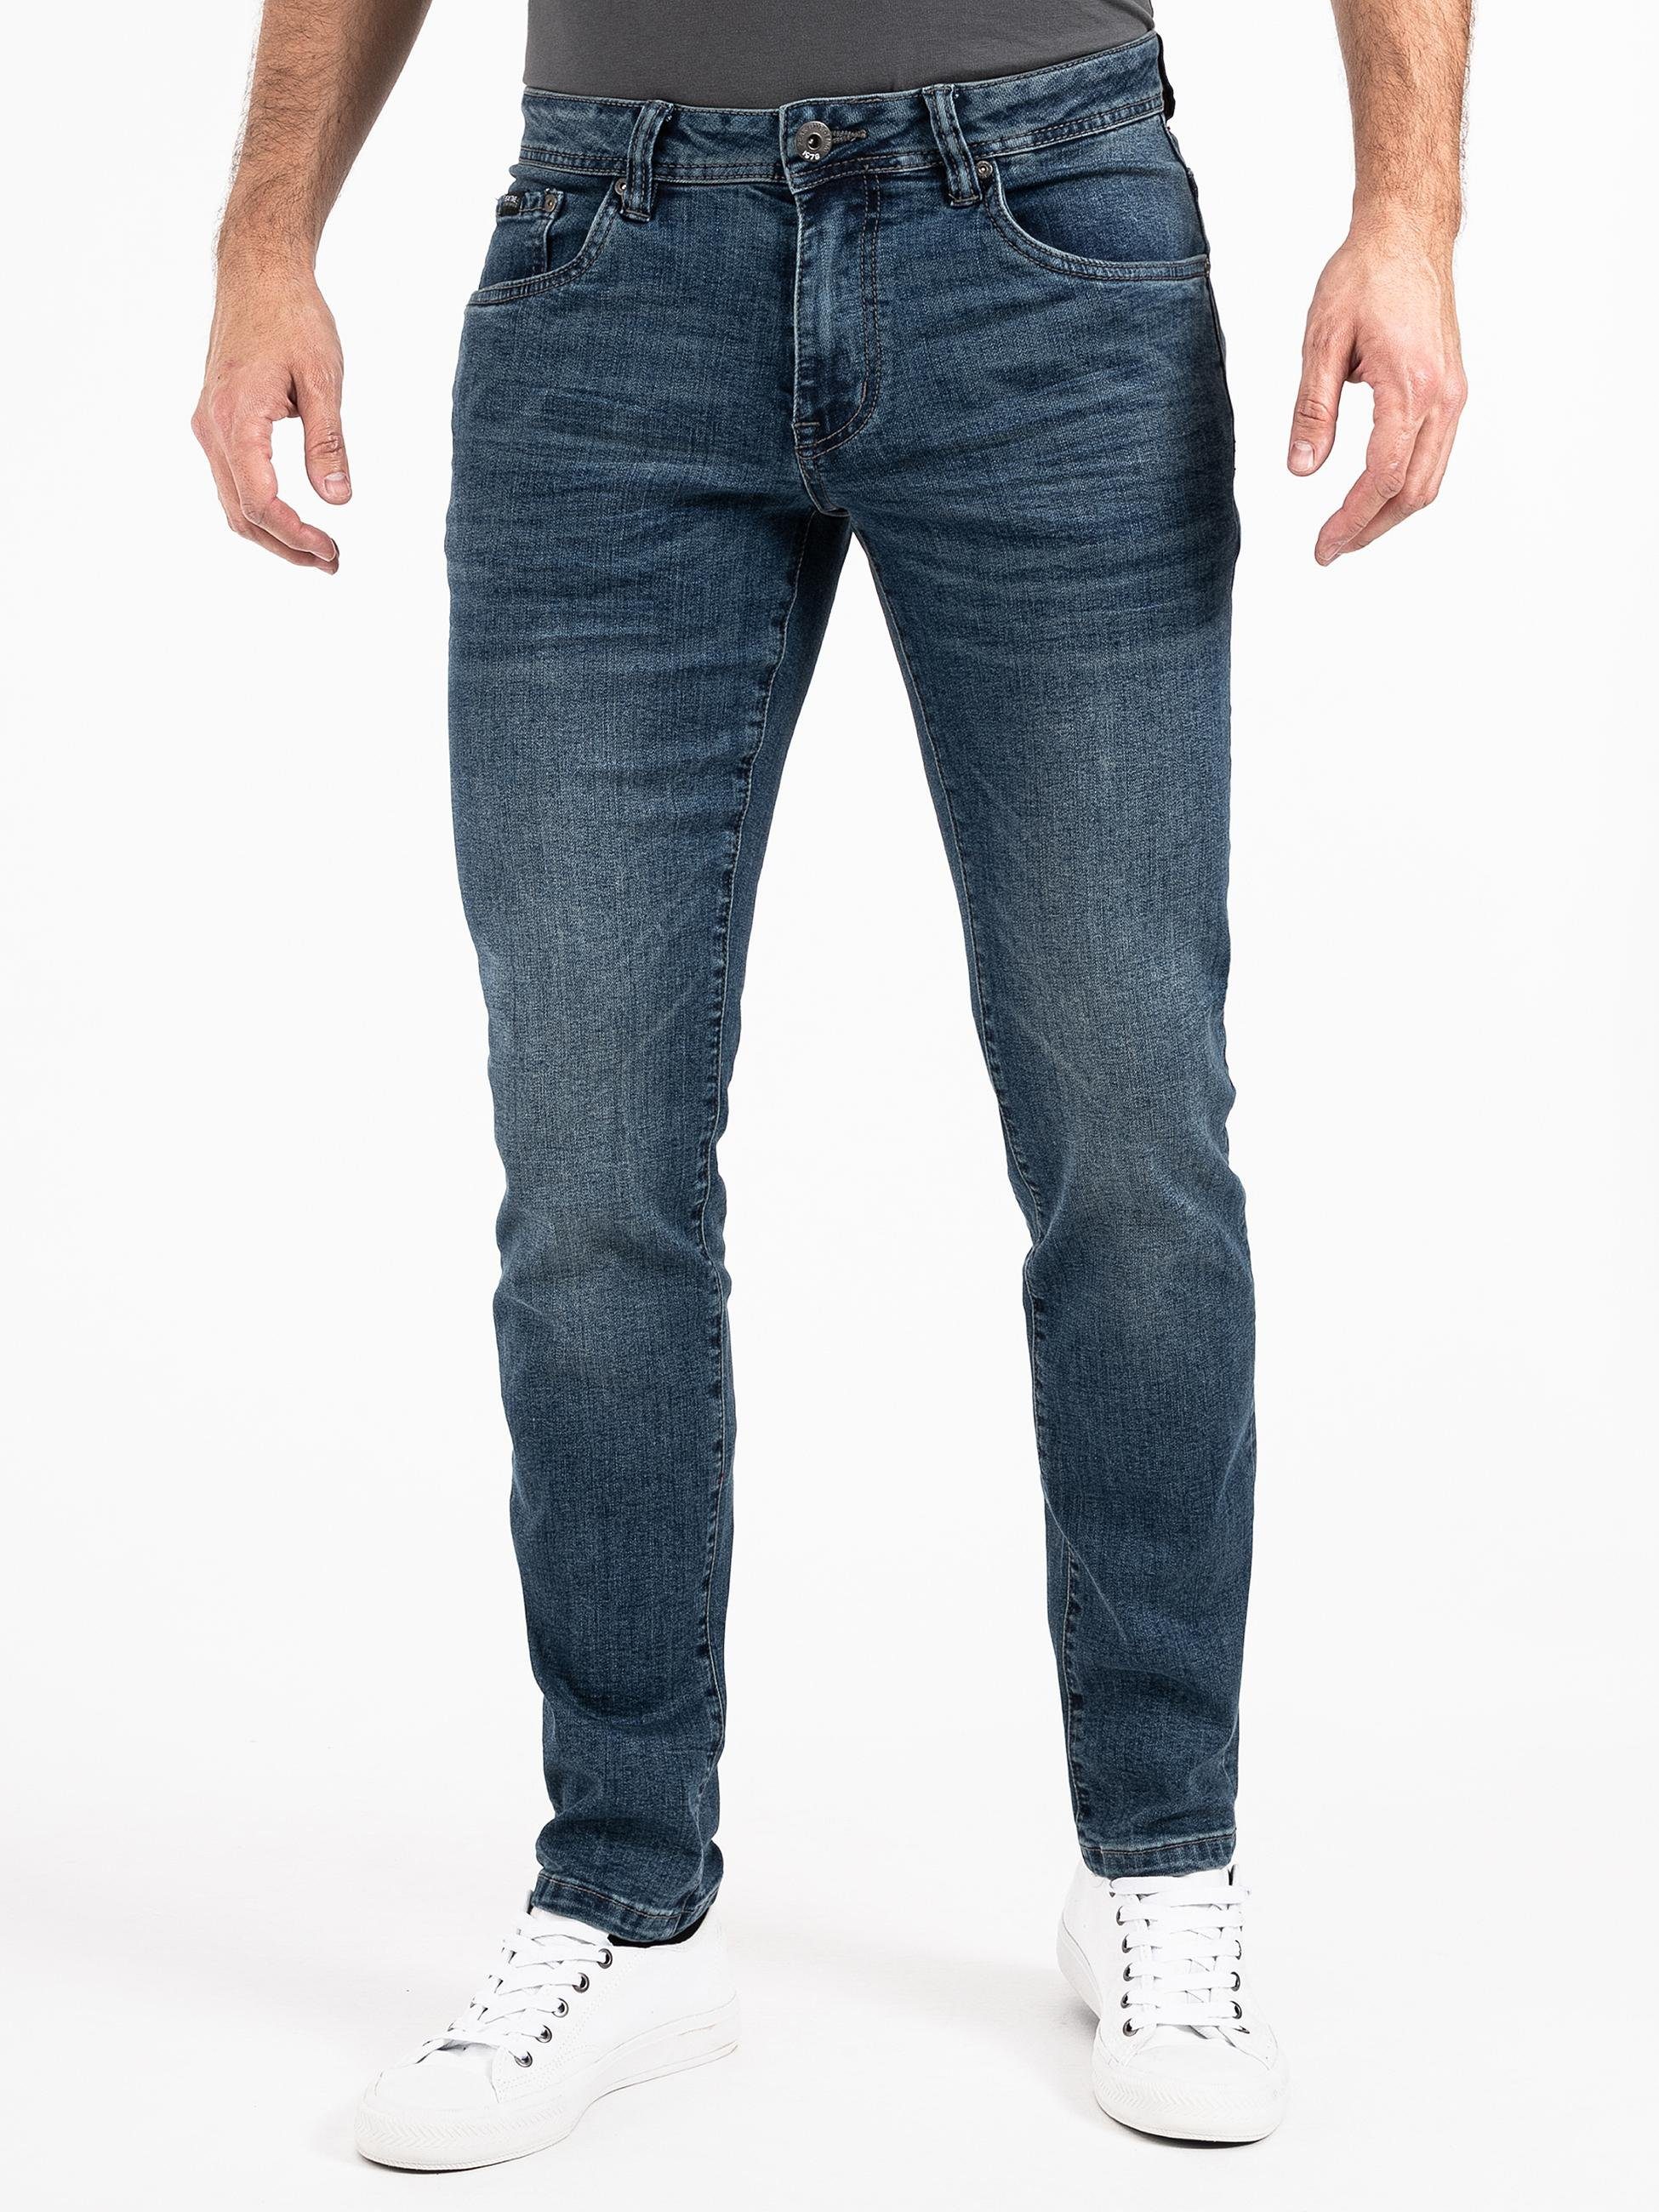 PEAK TIME Slim-fit-Jeans Mailand Herren Jeans mit super hohem Stretch-Anteil blau